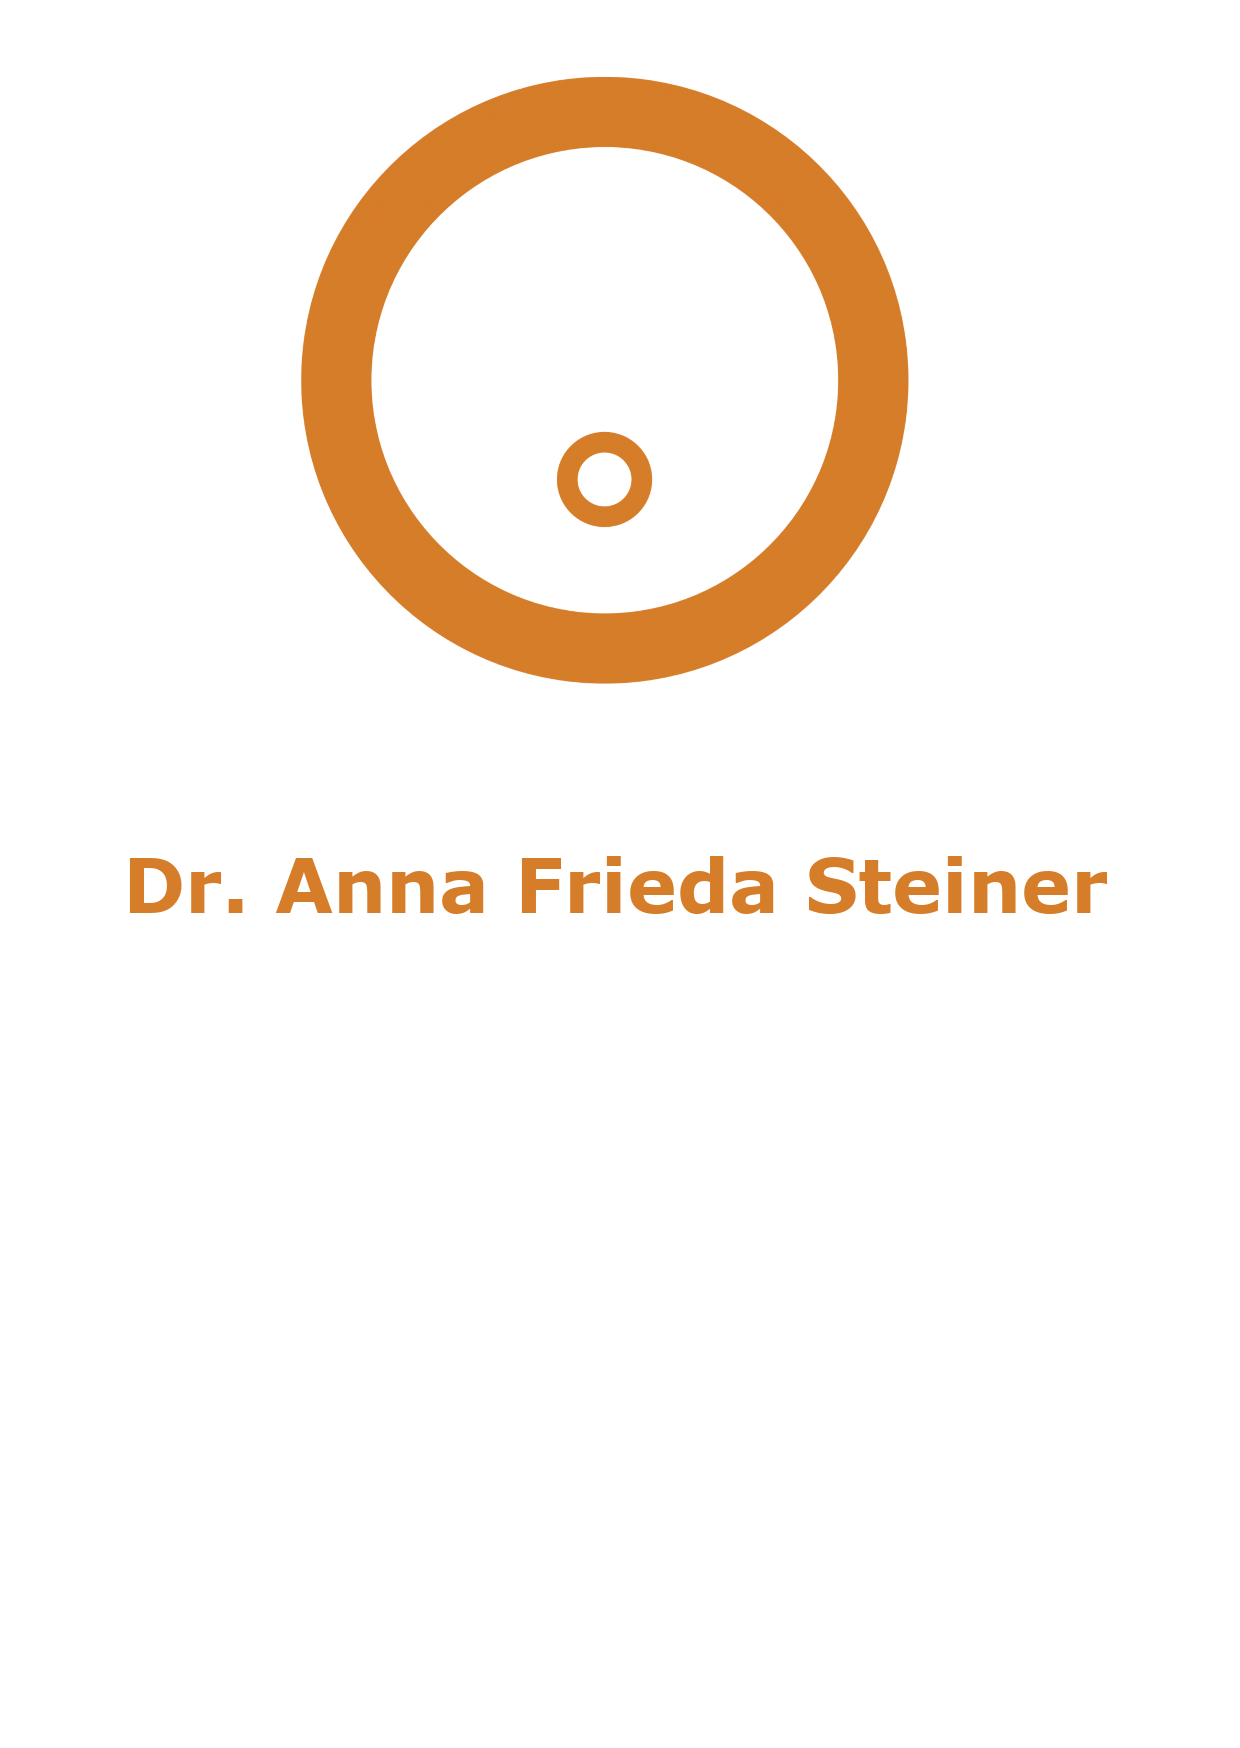 www.logopaedie-steiner.at